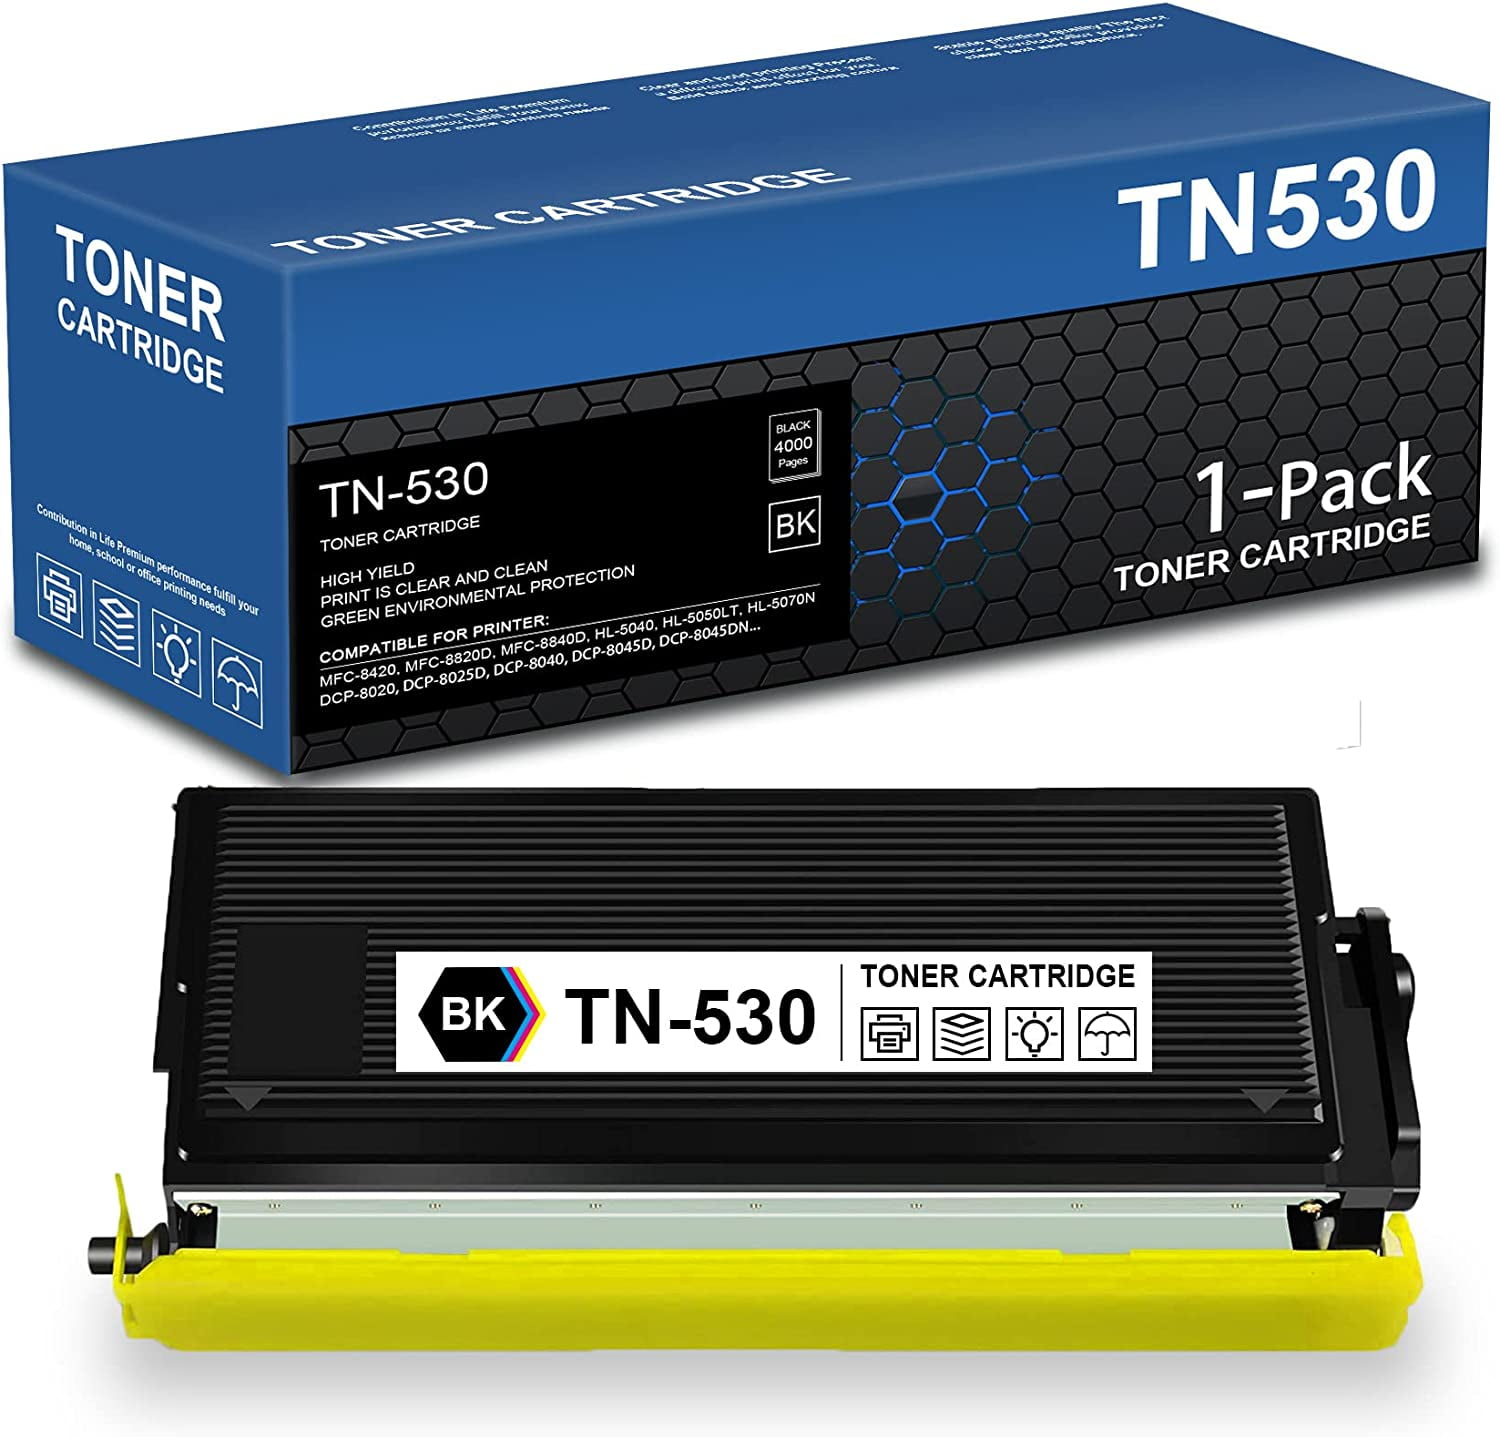 INK Compatible TN-530 Toner Replacement Brother MFC-8420 8820DN 8220 8440 8840D 8840DN 8120 8640D, HL-5040 5050LT 5070N 5140 5150D 5170DN Printer (1-Pack, Black) - Walmart.com